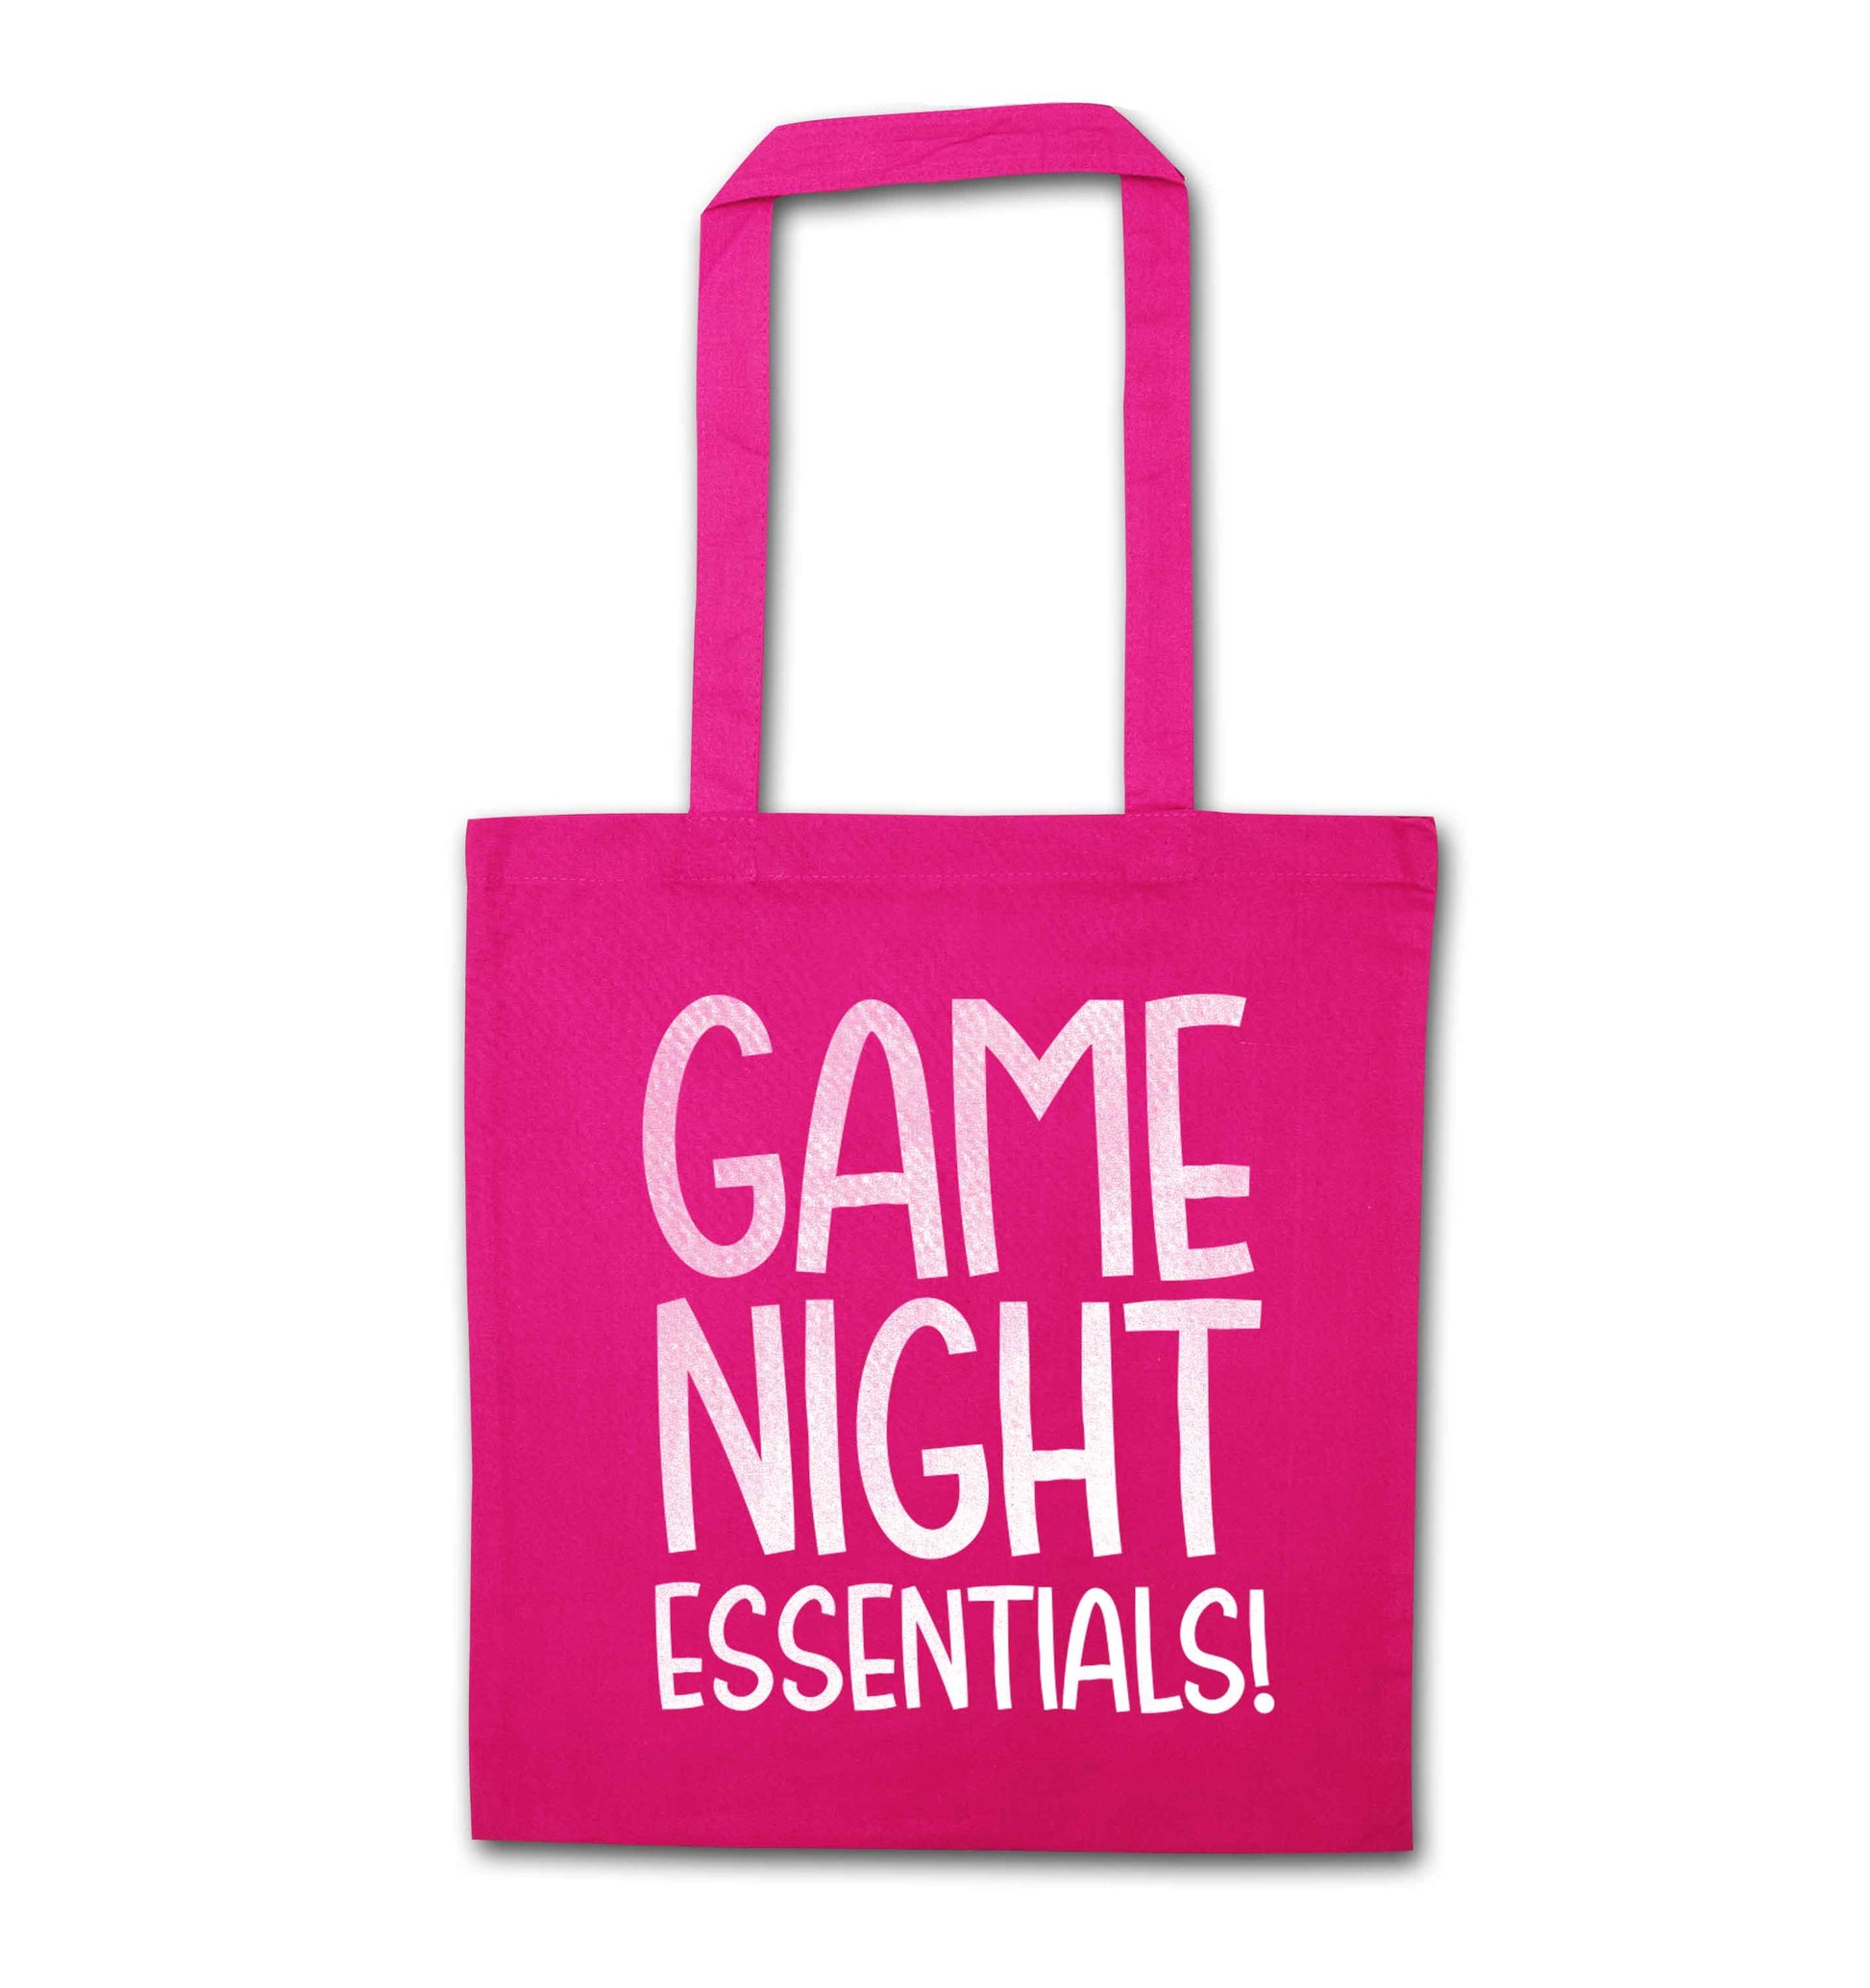 Game night essentials pink tote bag